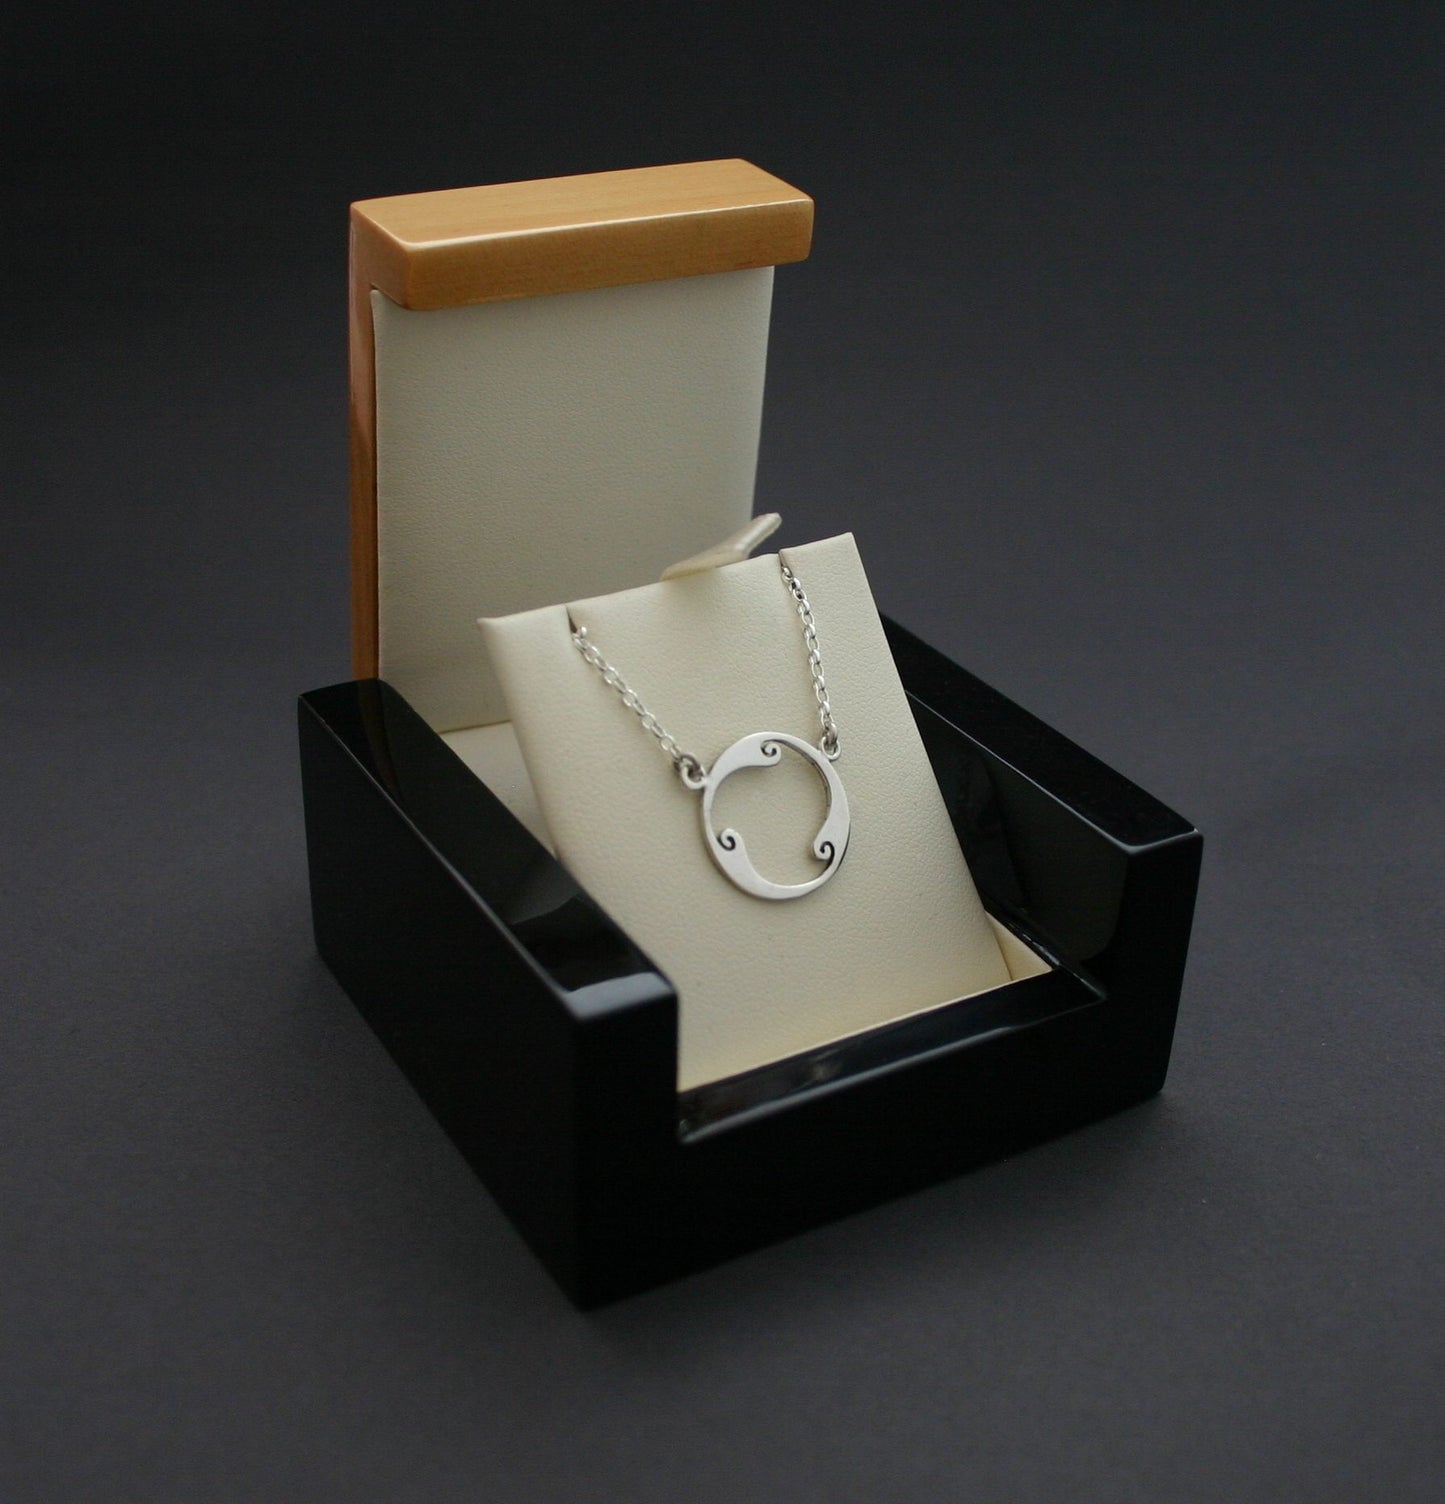 silver triskele pendant necklace in box